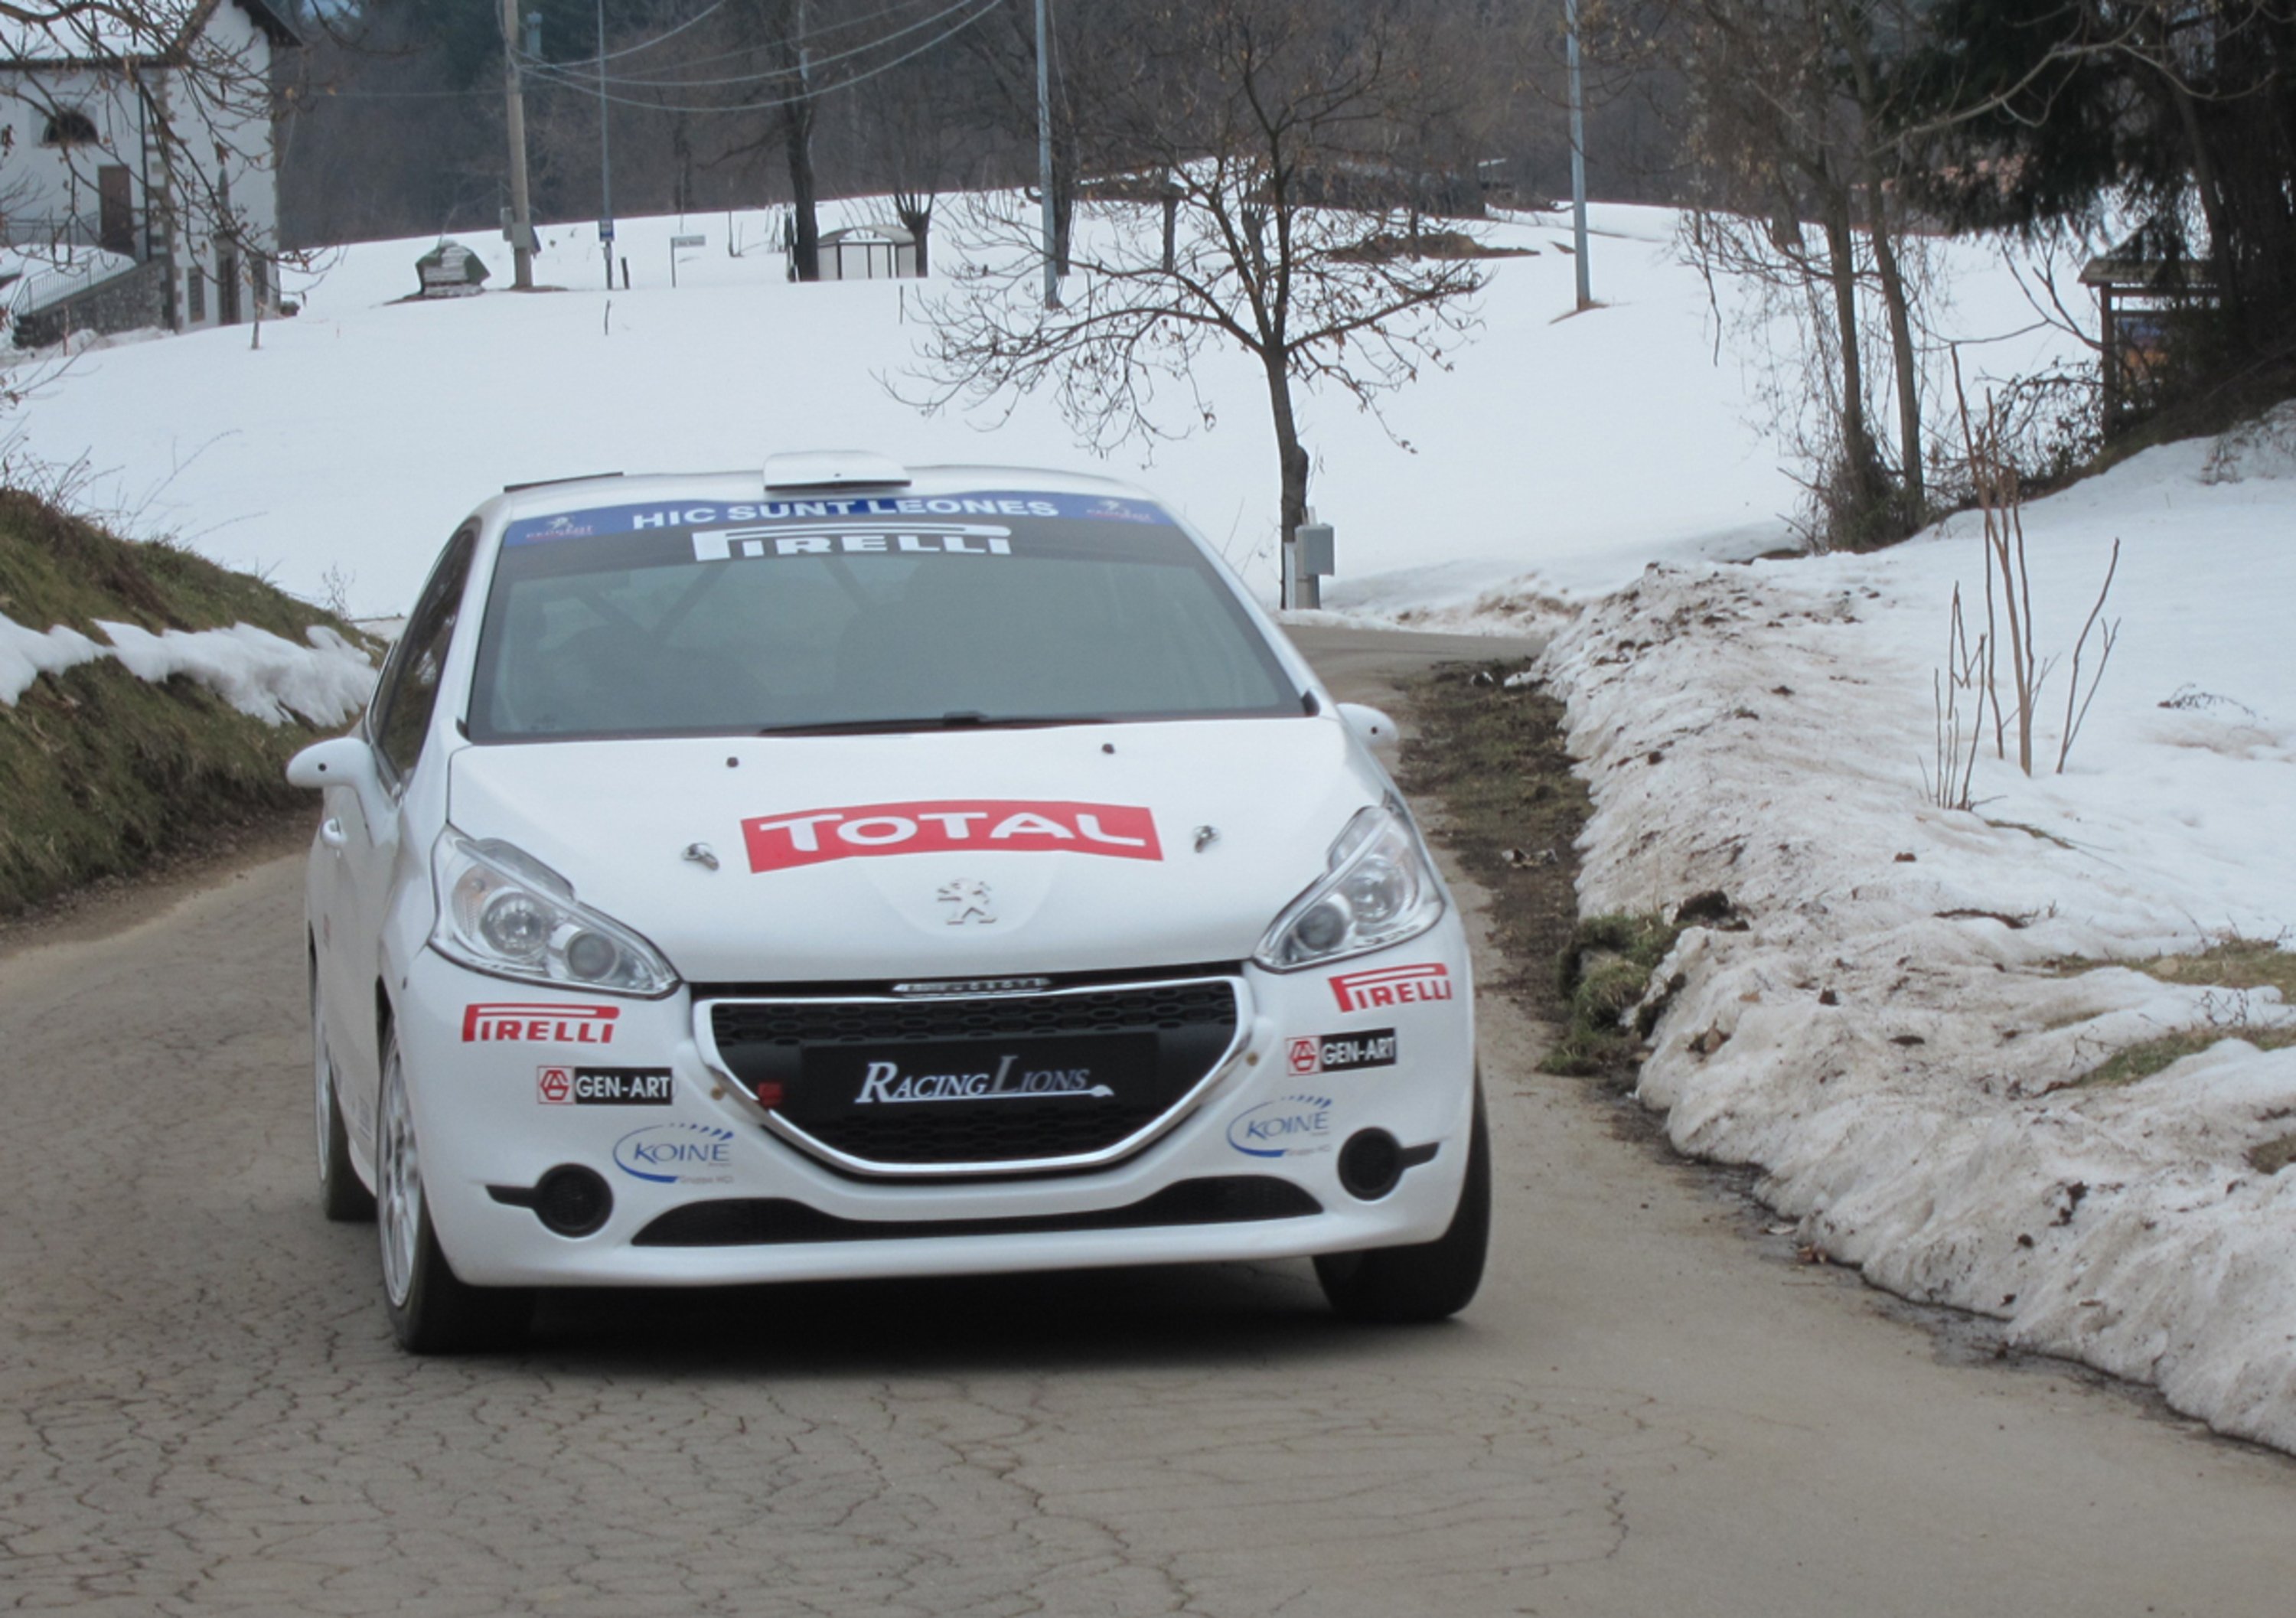 Campionato Italiano Rally 2013: al via questo weekend con il Rally del Ciocco